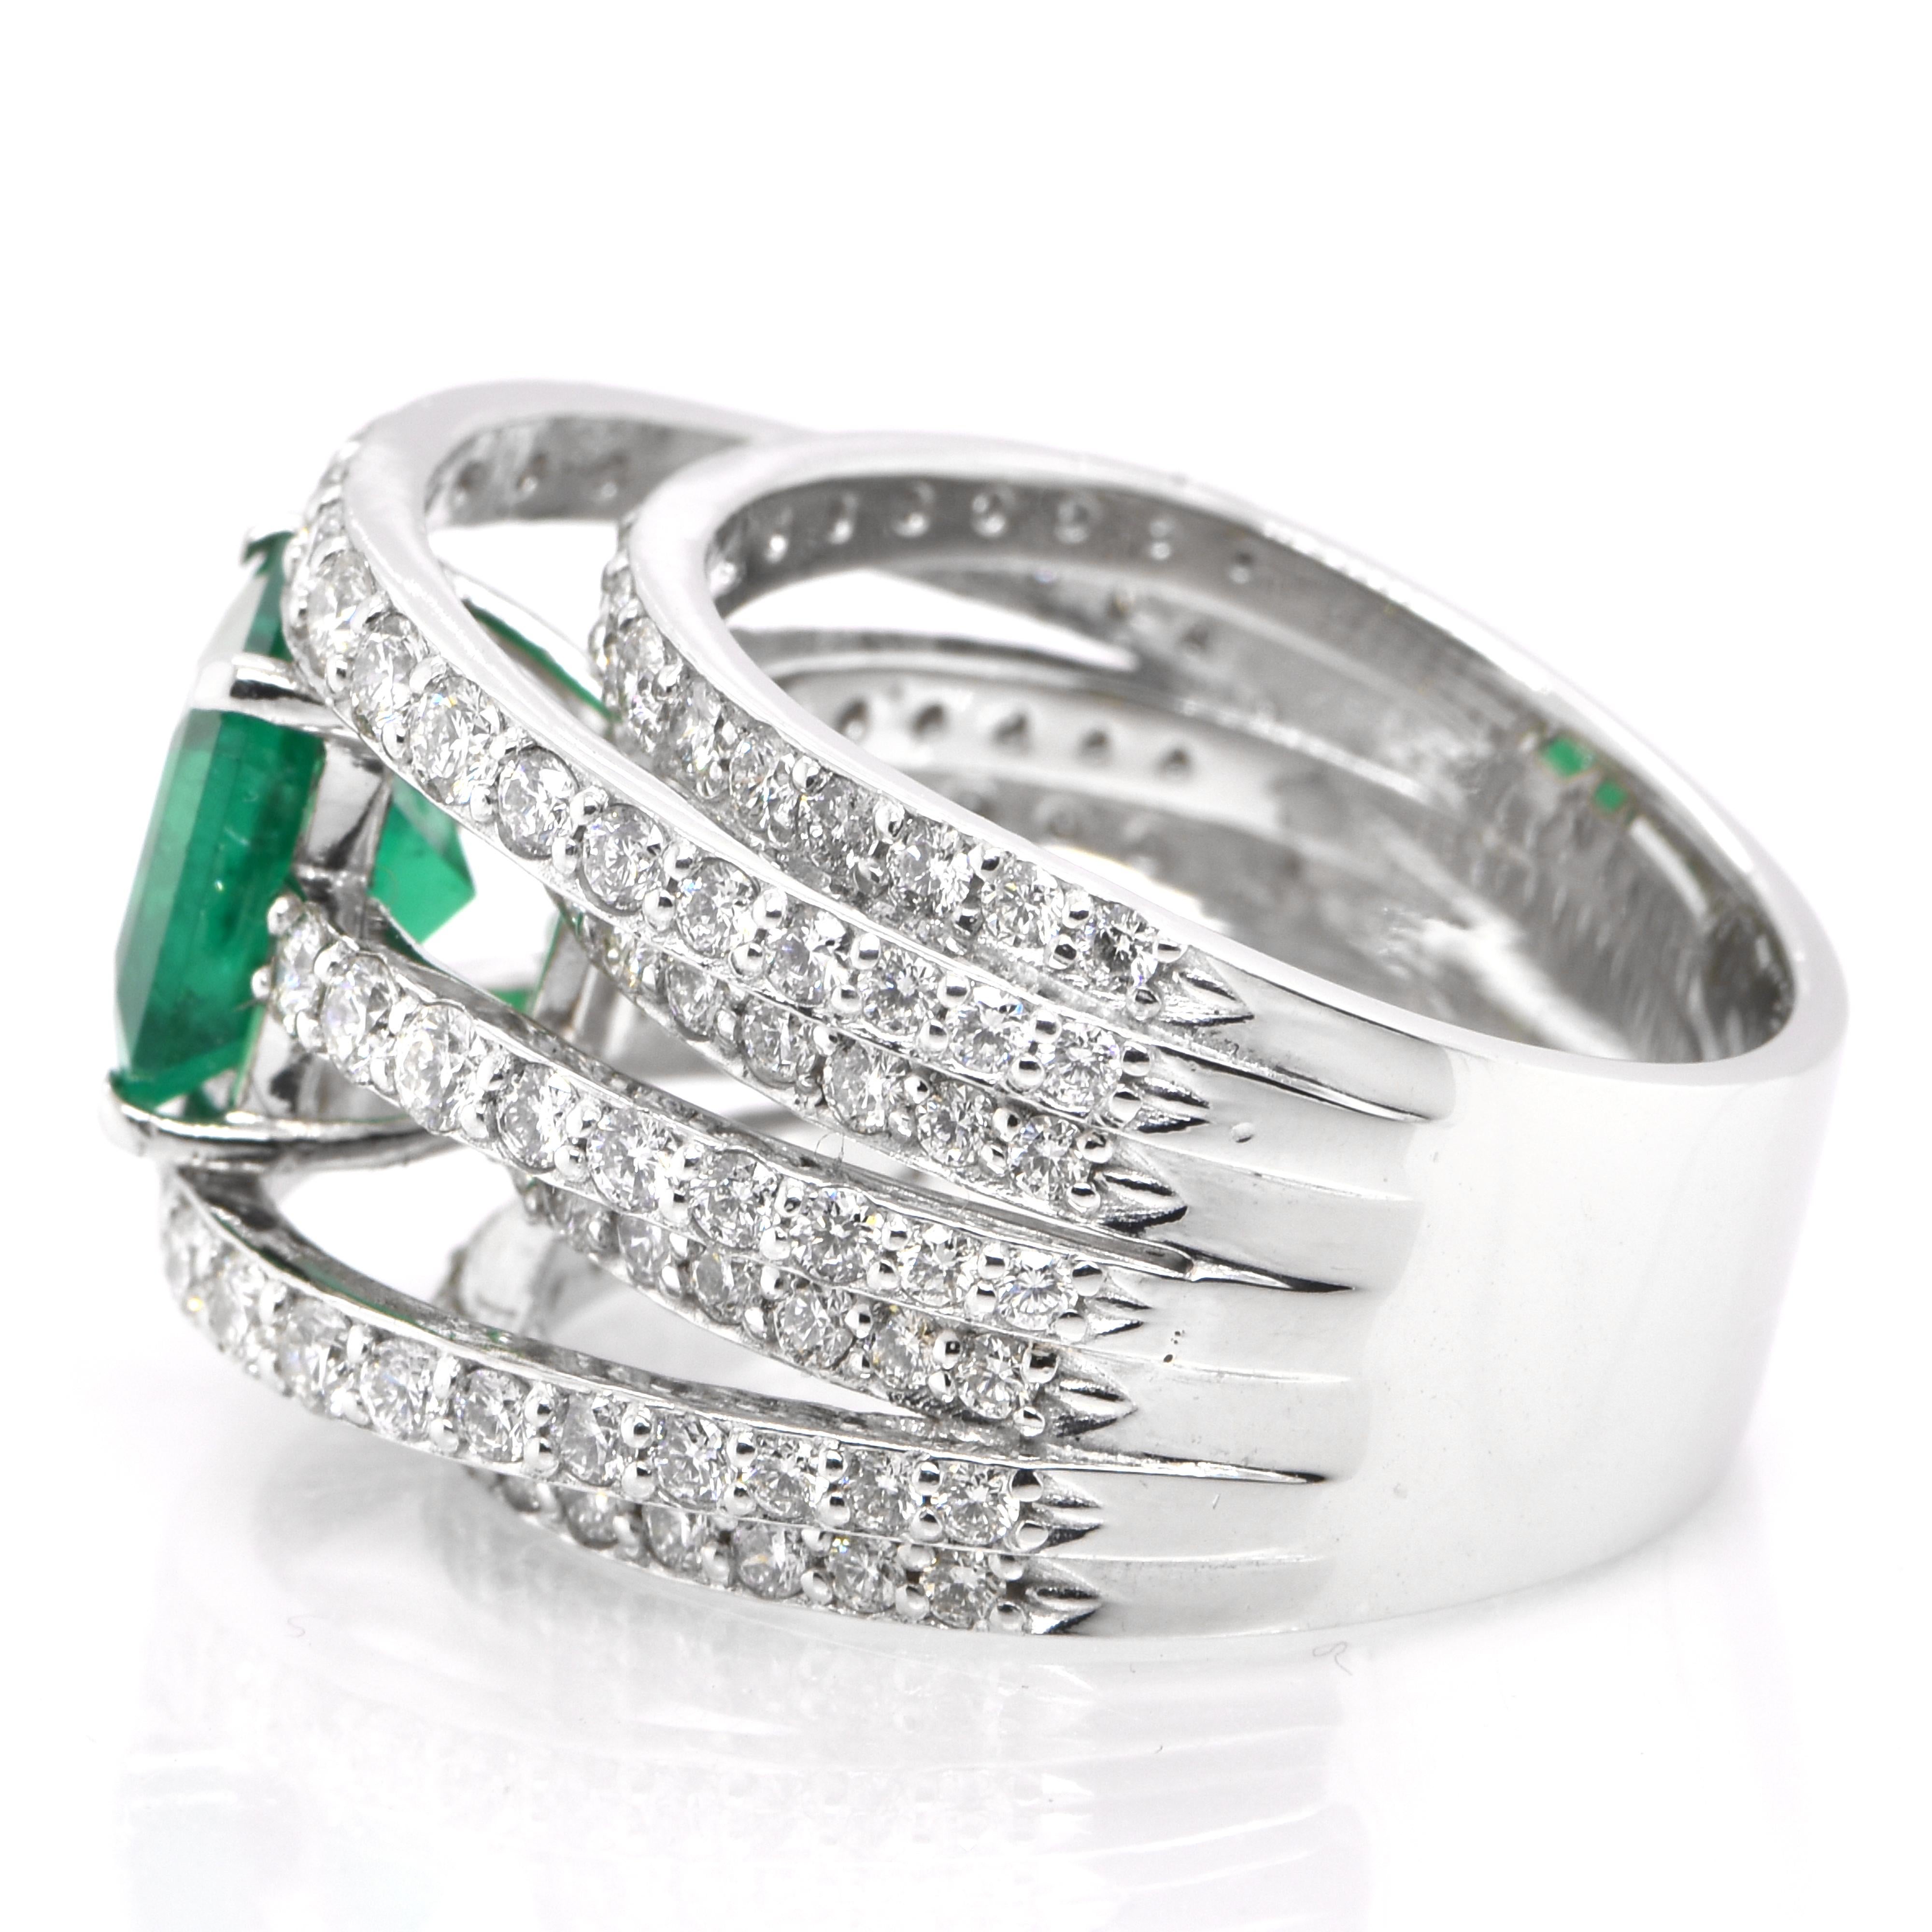 Emerald Cut 1.66 Carat Colombian, Muzo Color Emerald & Diamond Cocktail Ring Set in Platinum For Sale